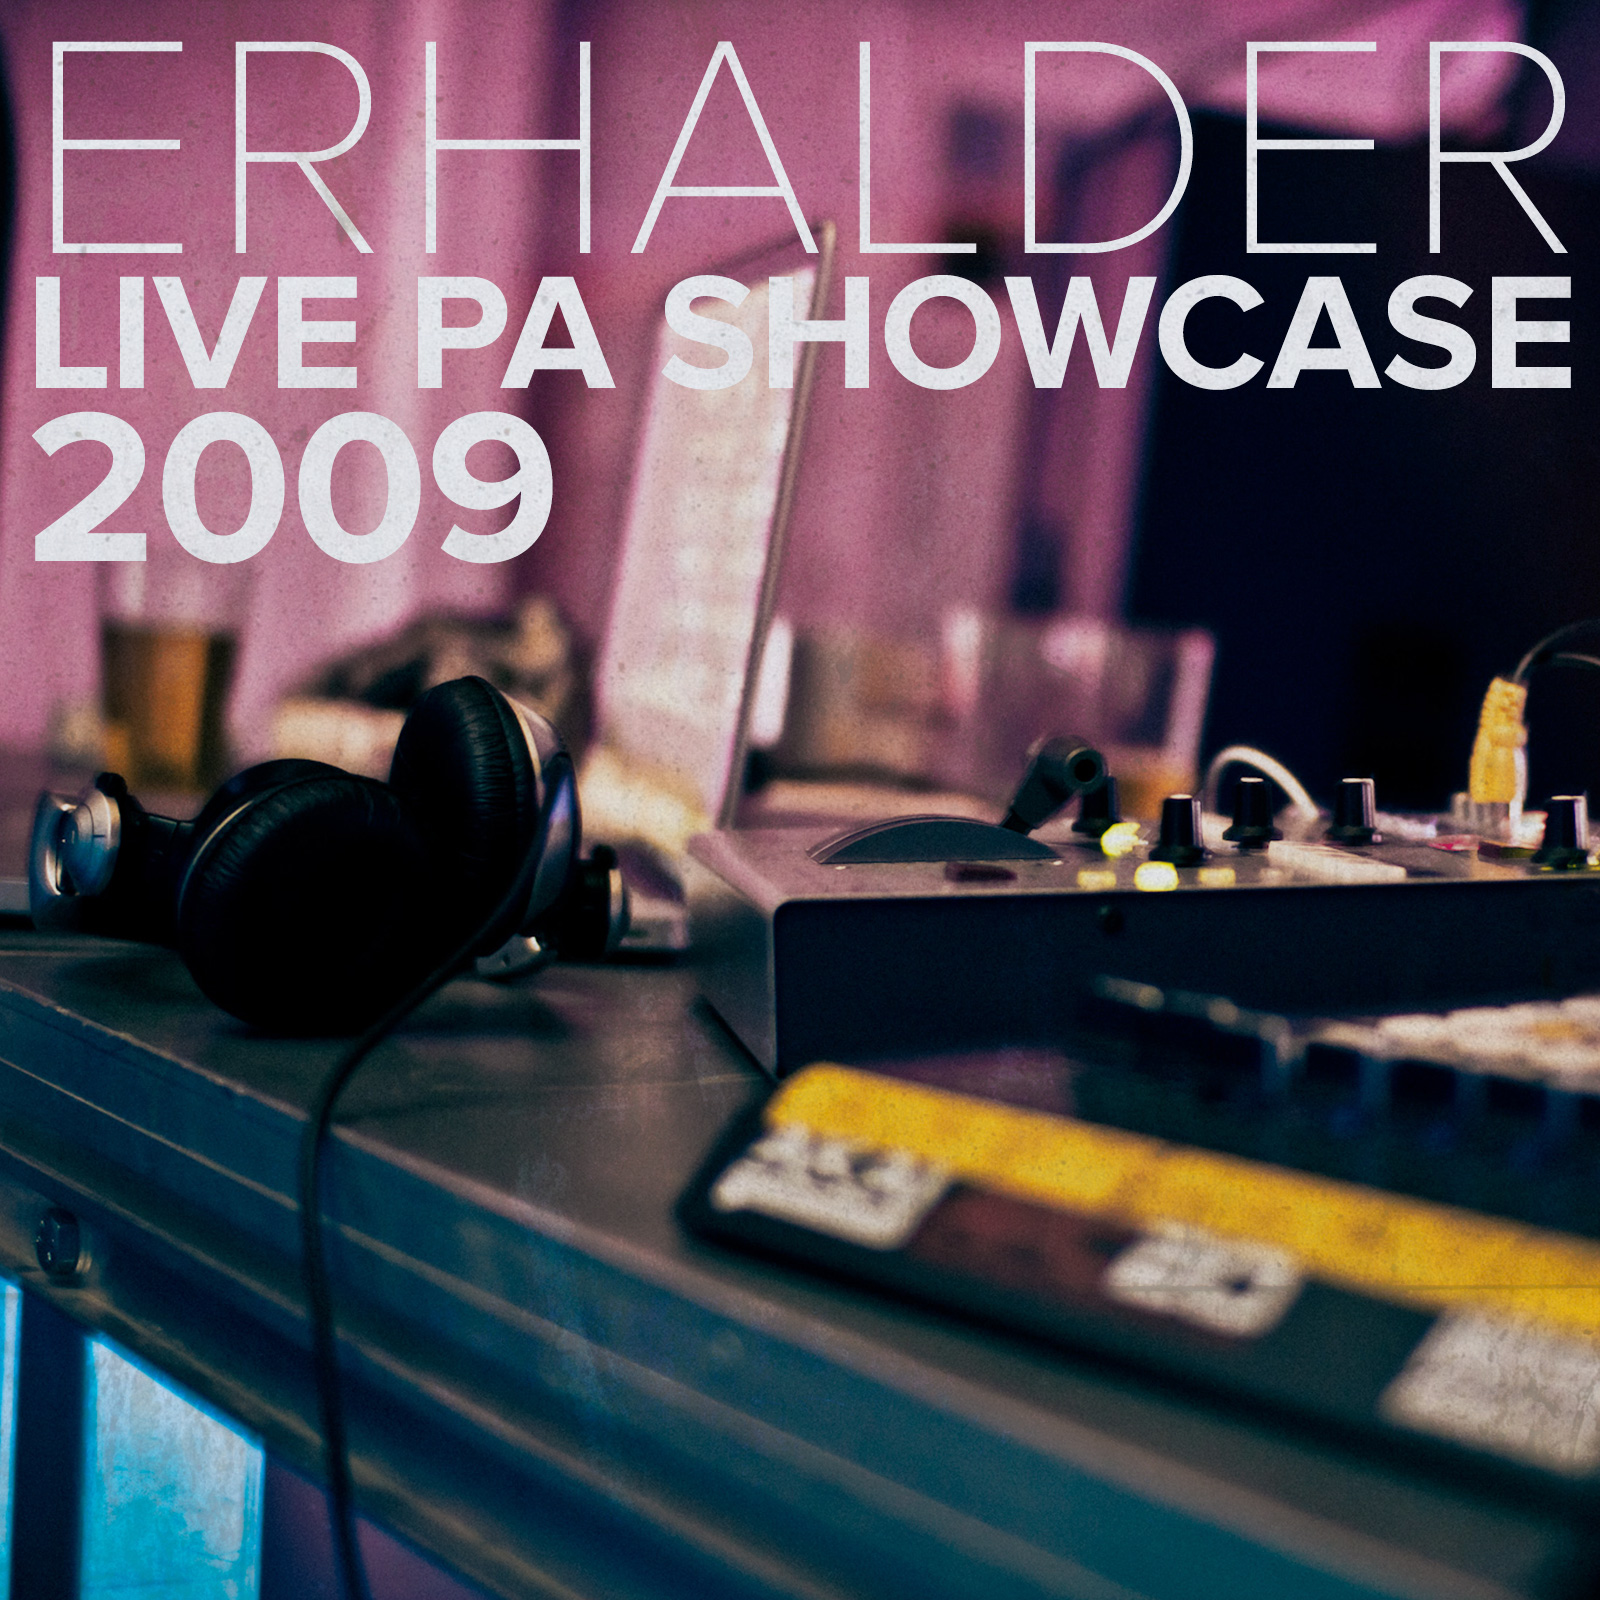 Live PA Showcase 2009